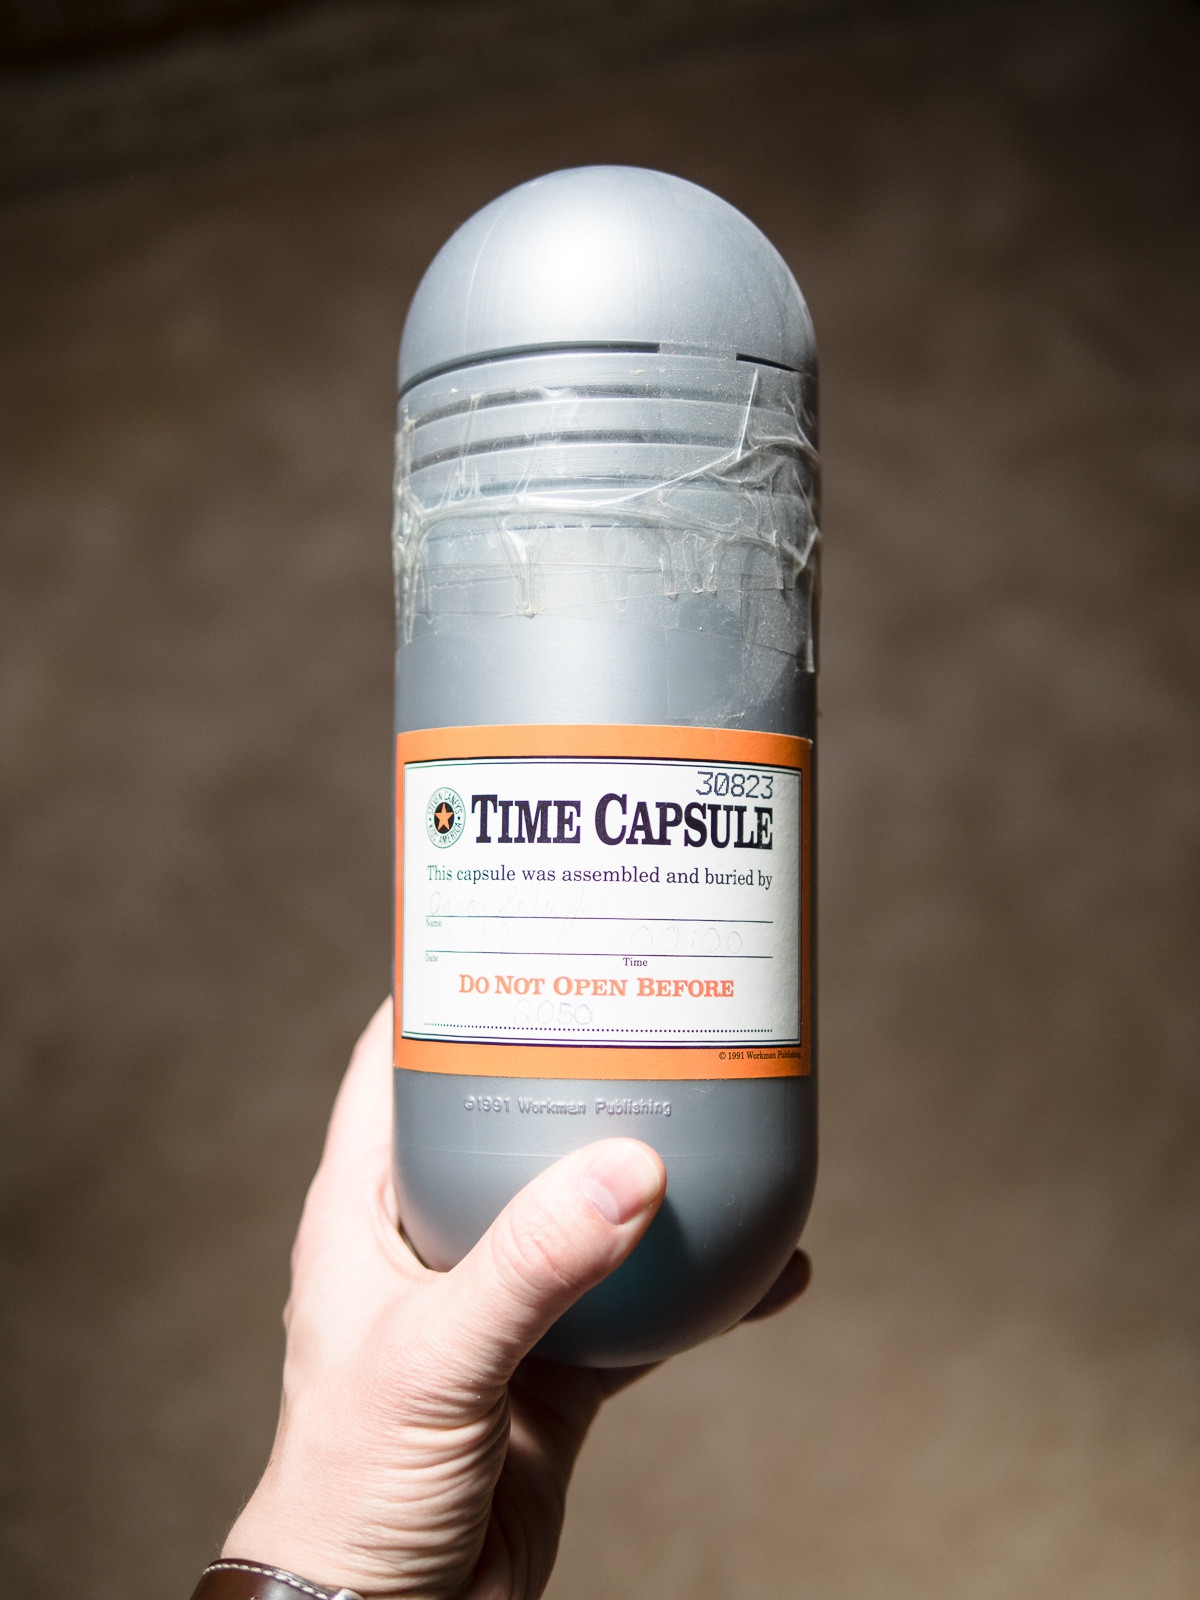 Time capsule